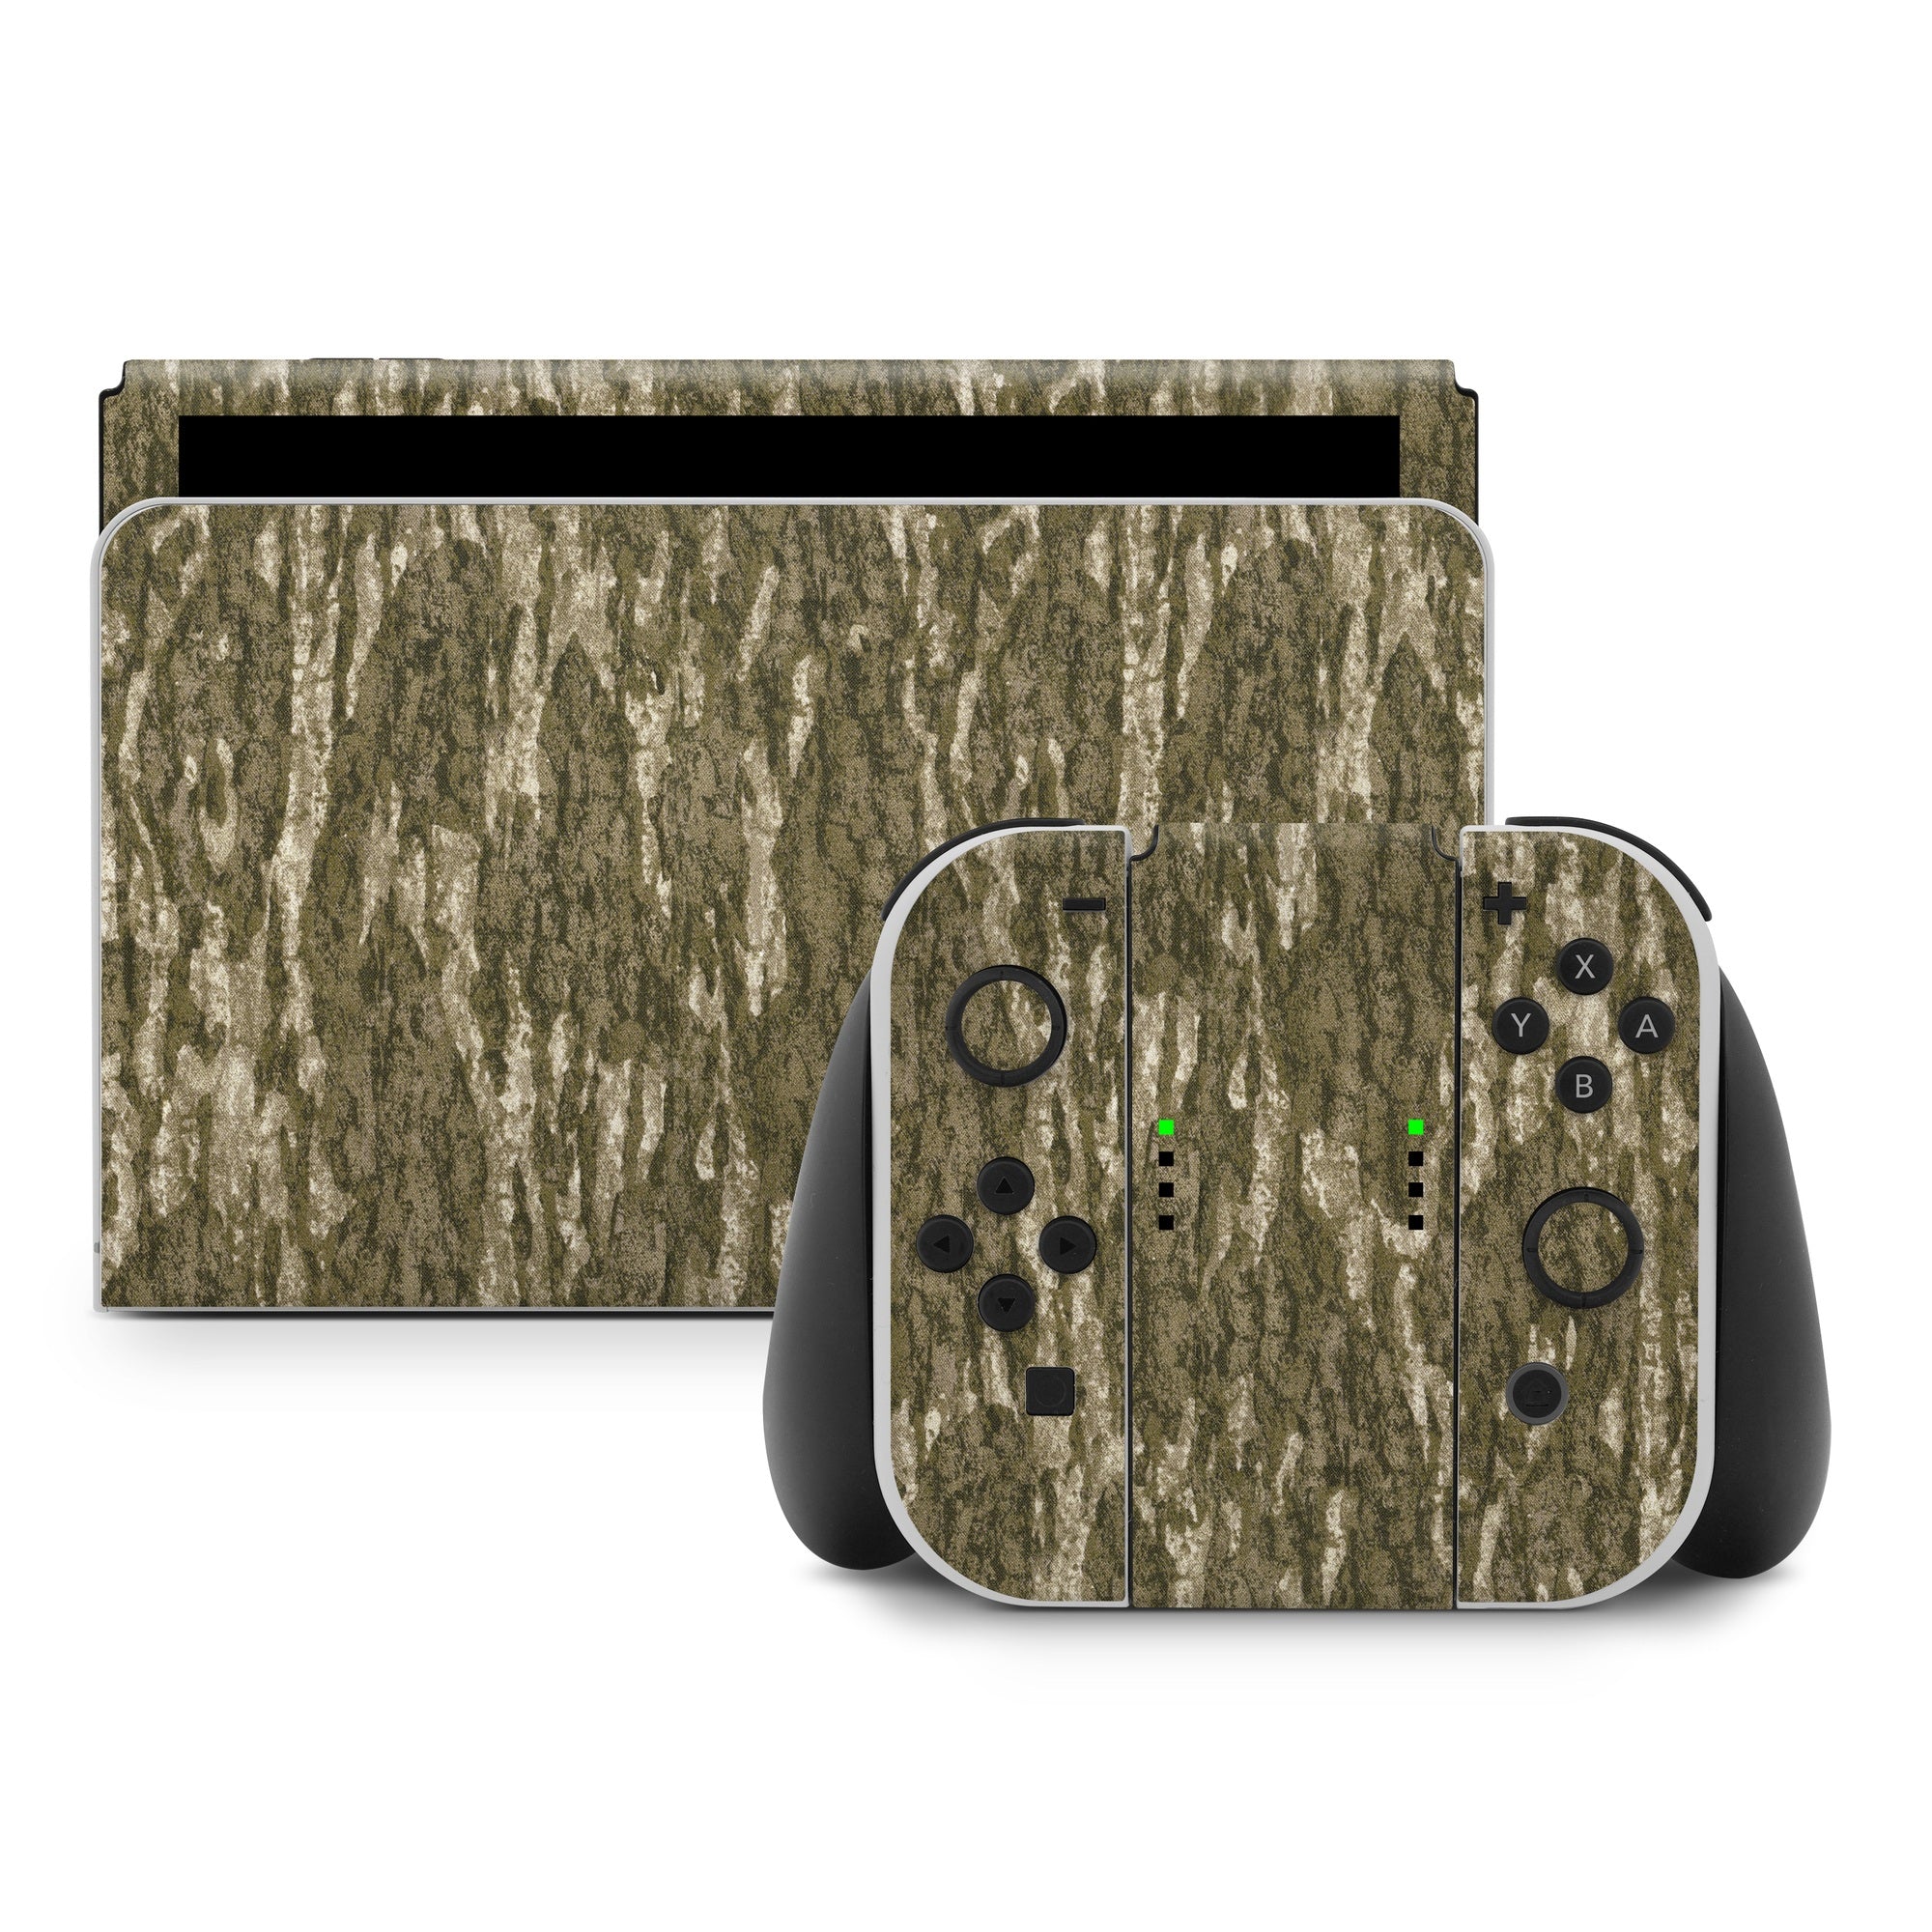 New Bottomland - Nintendo Switch Skin